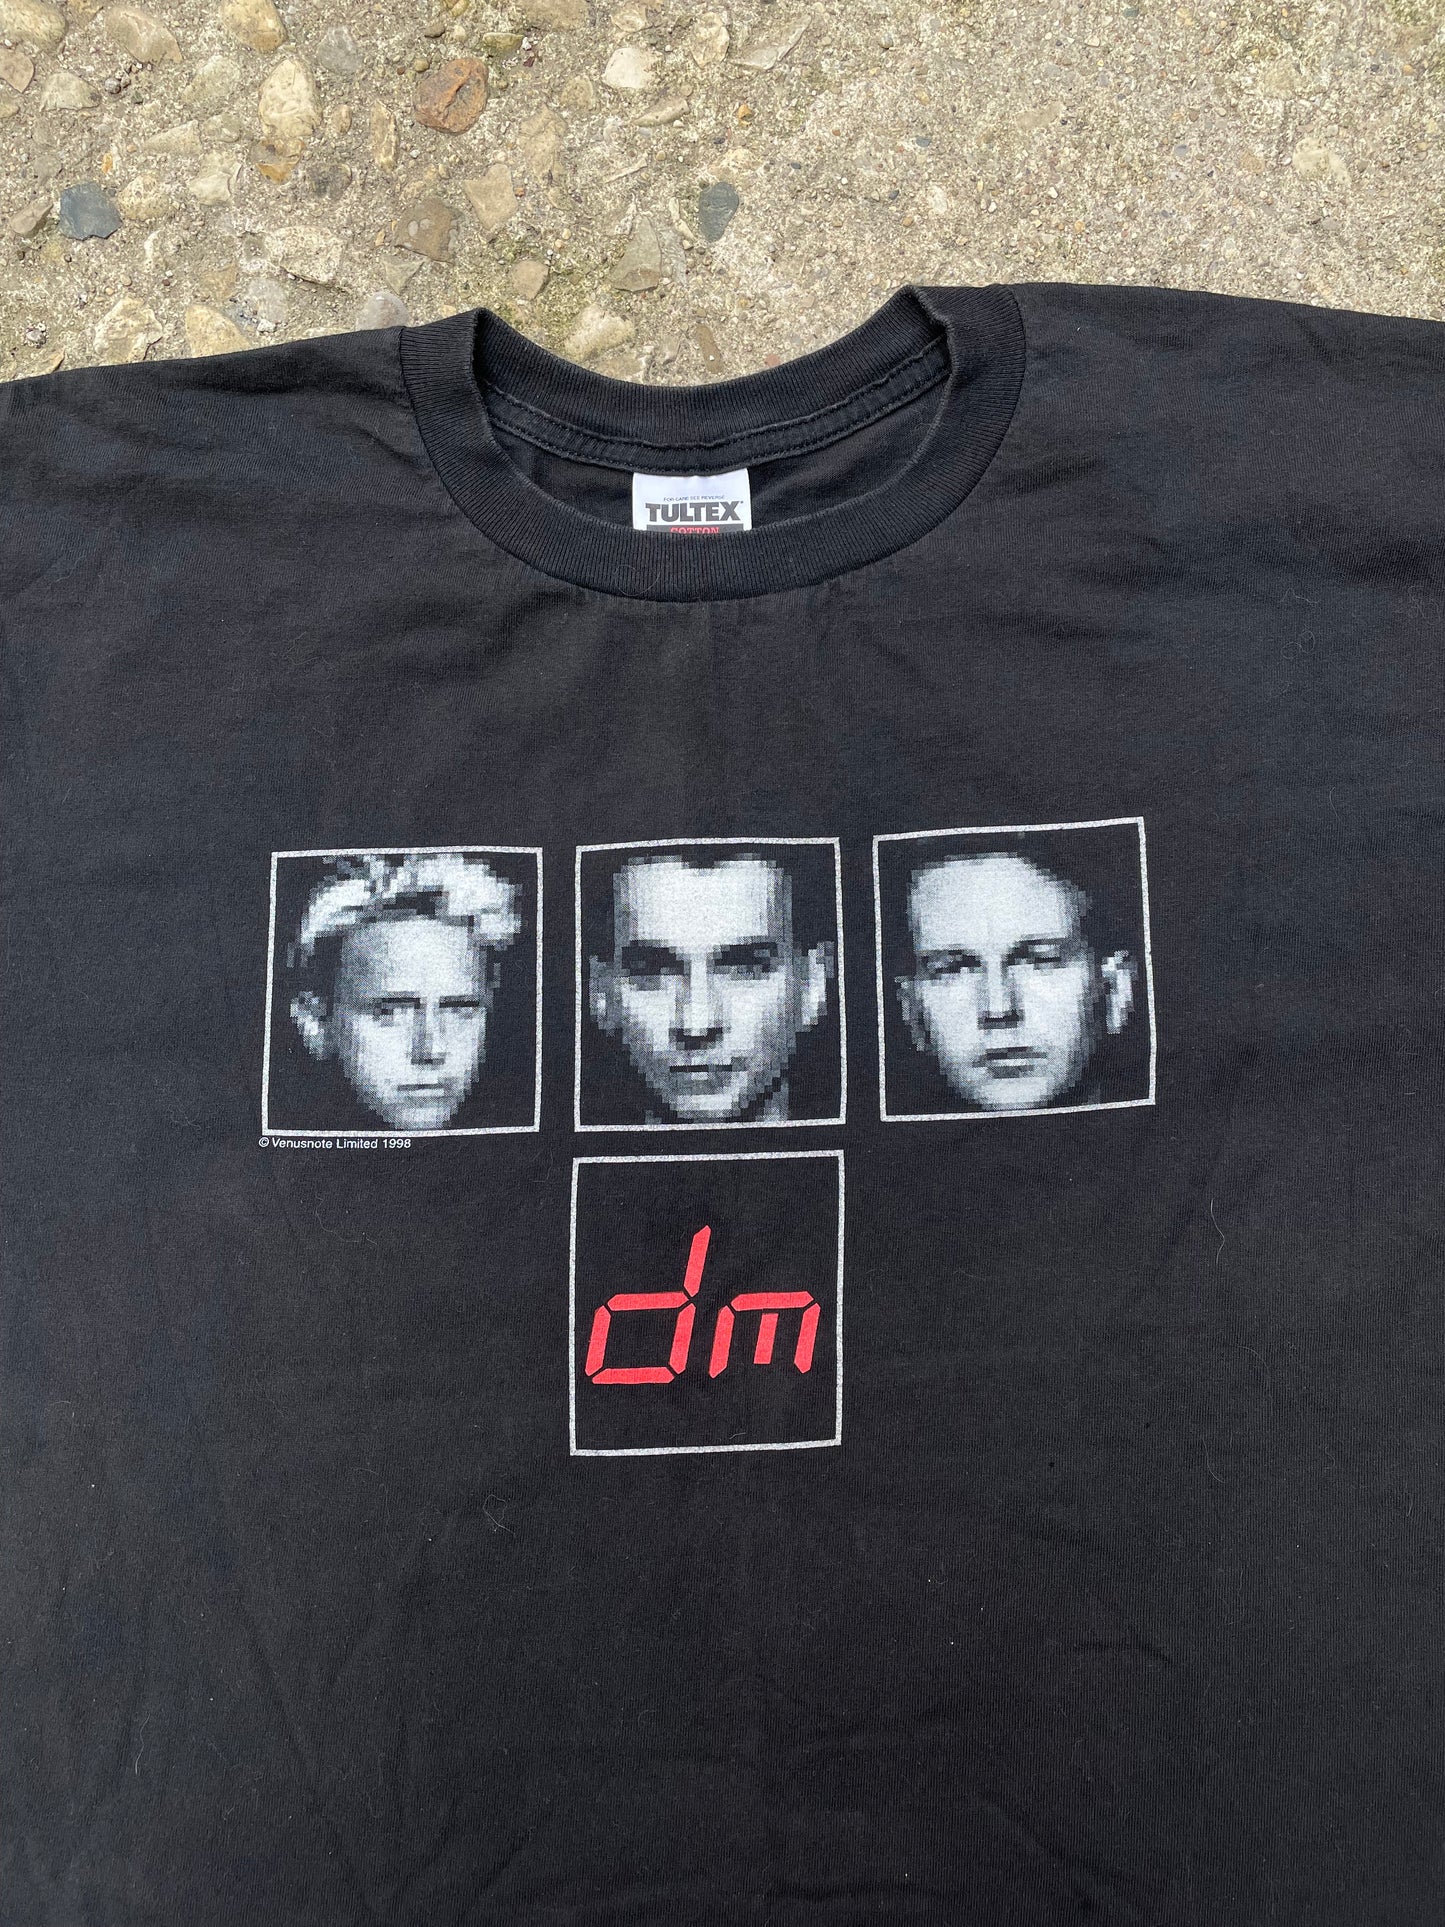 1998 Depeche Mode 'The Singles' Tour Band T-Shirt - XL